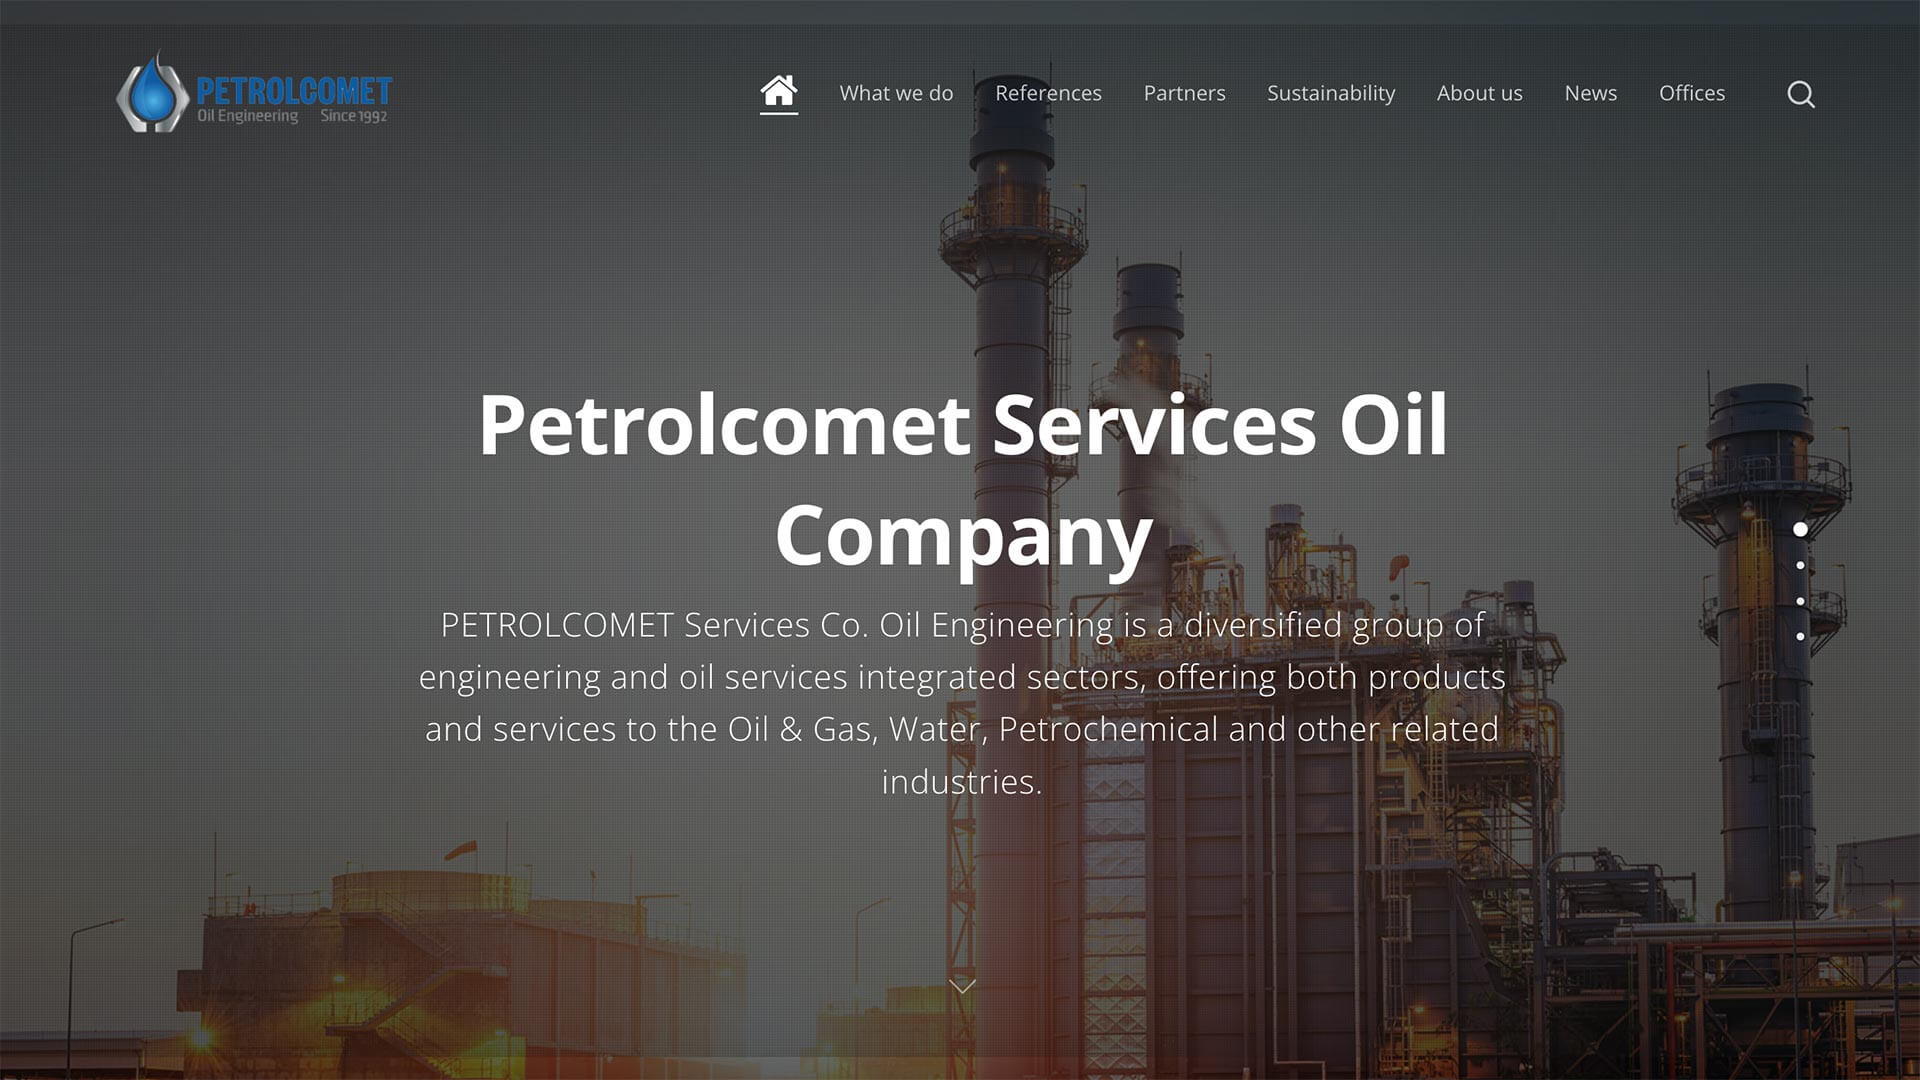 Petrolcomet services oil company